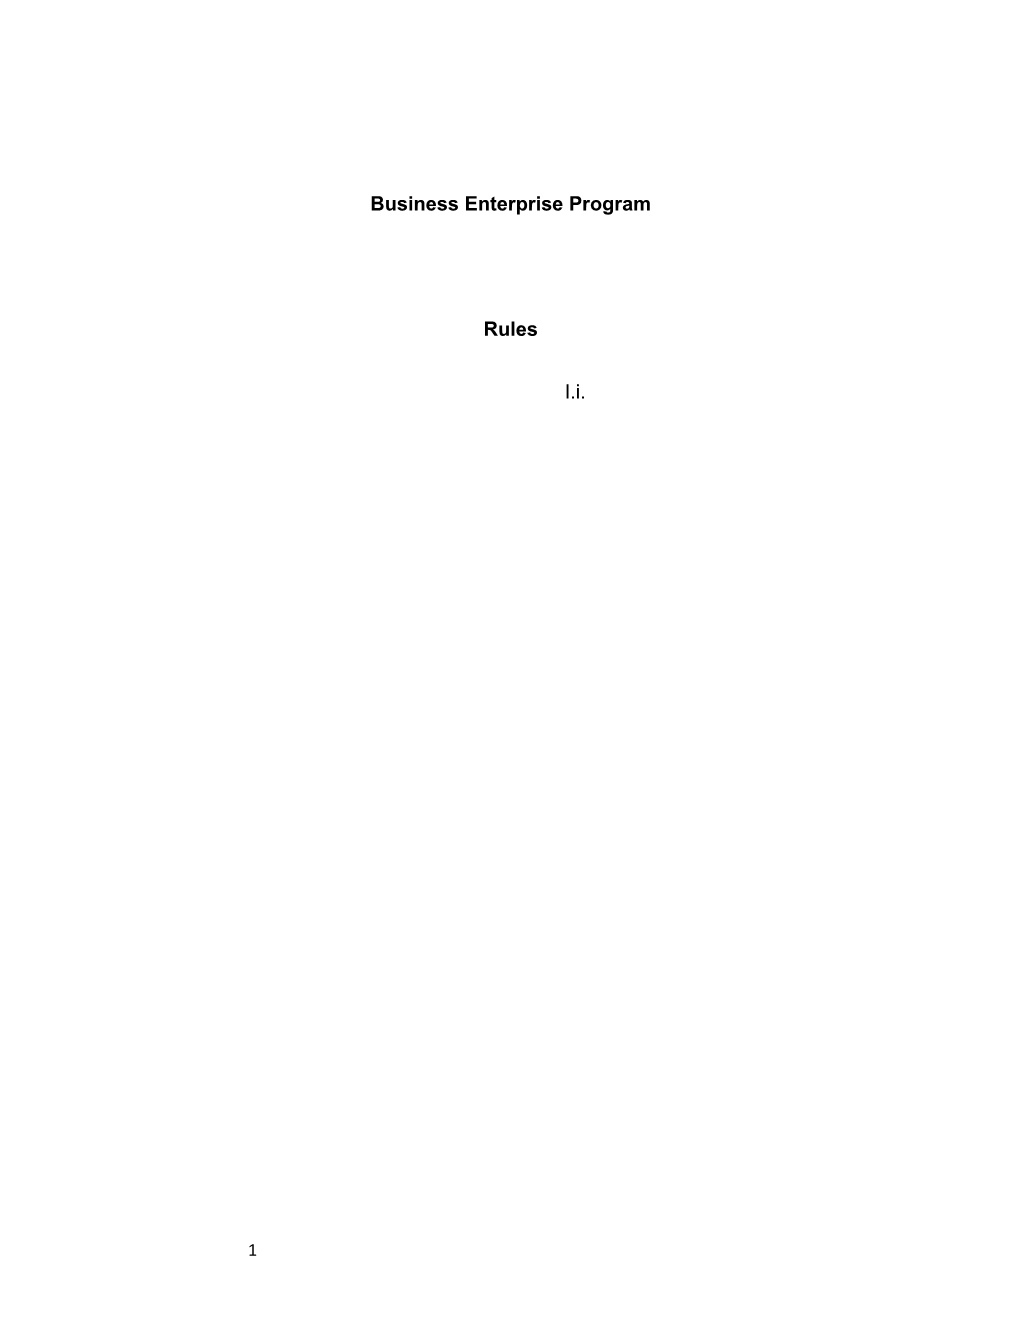 Business Enterprise Program Rules